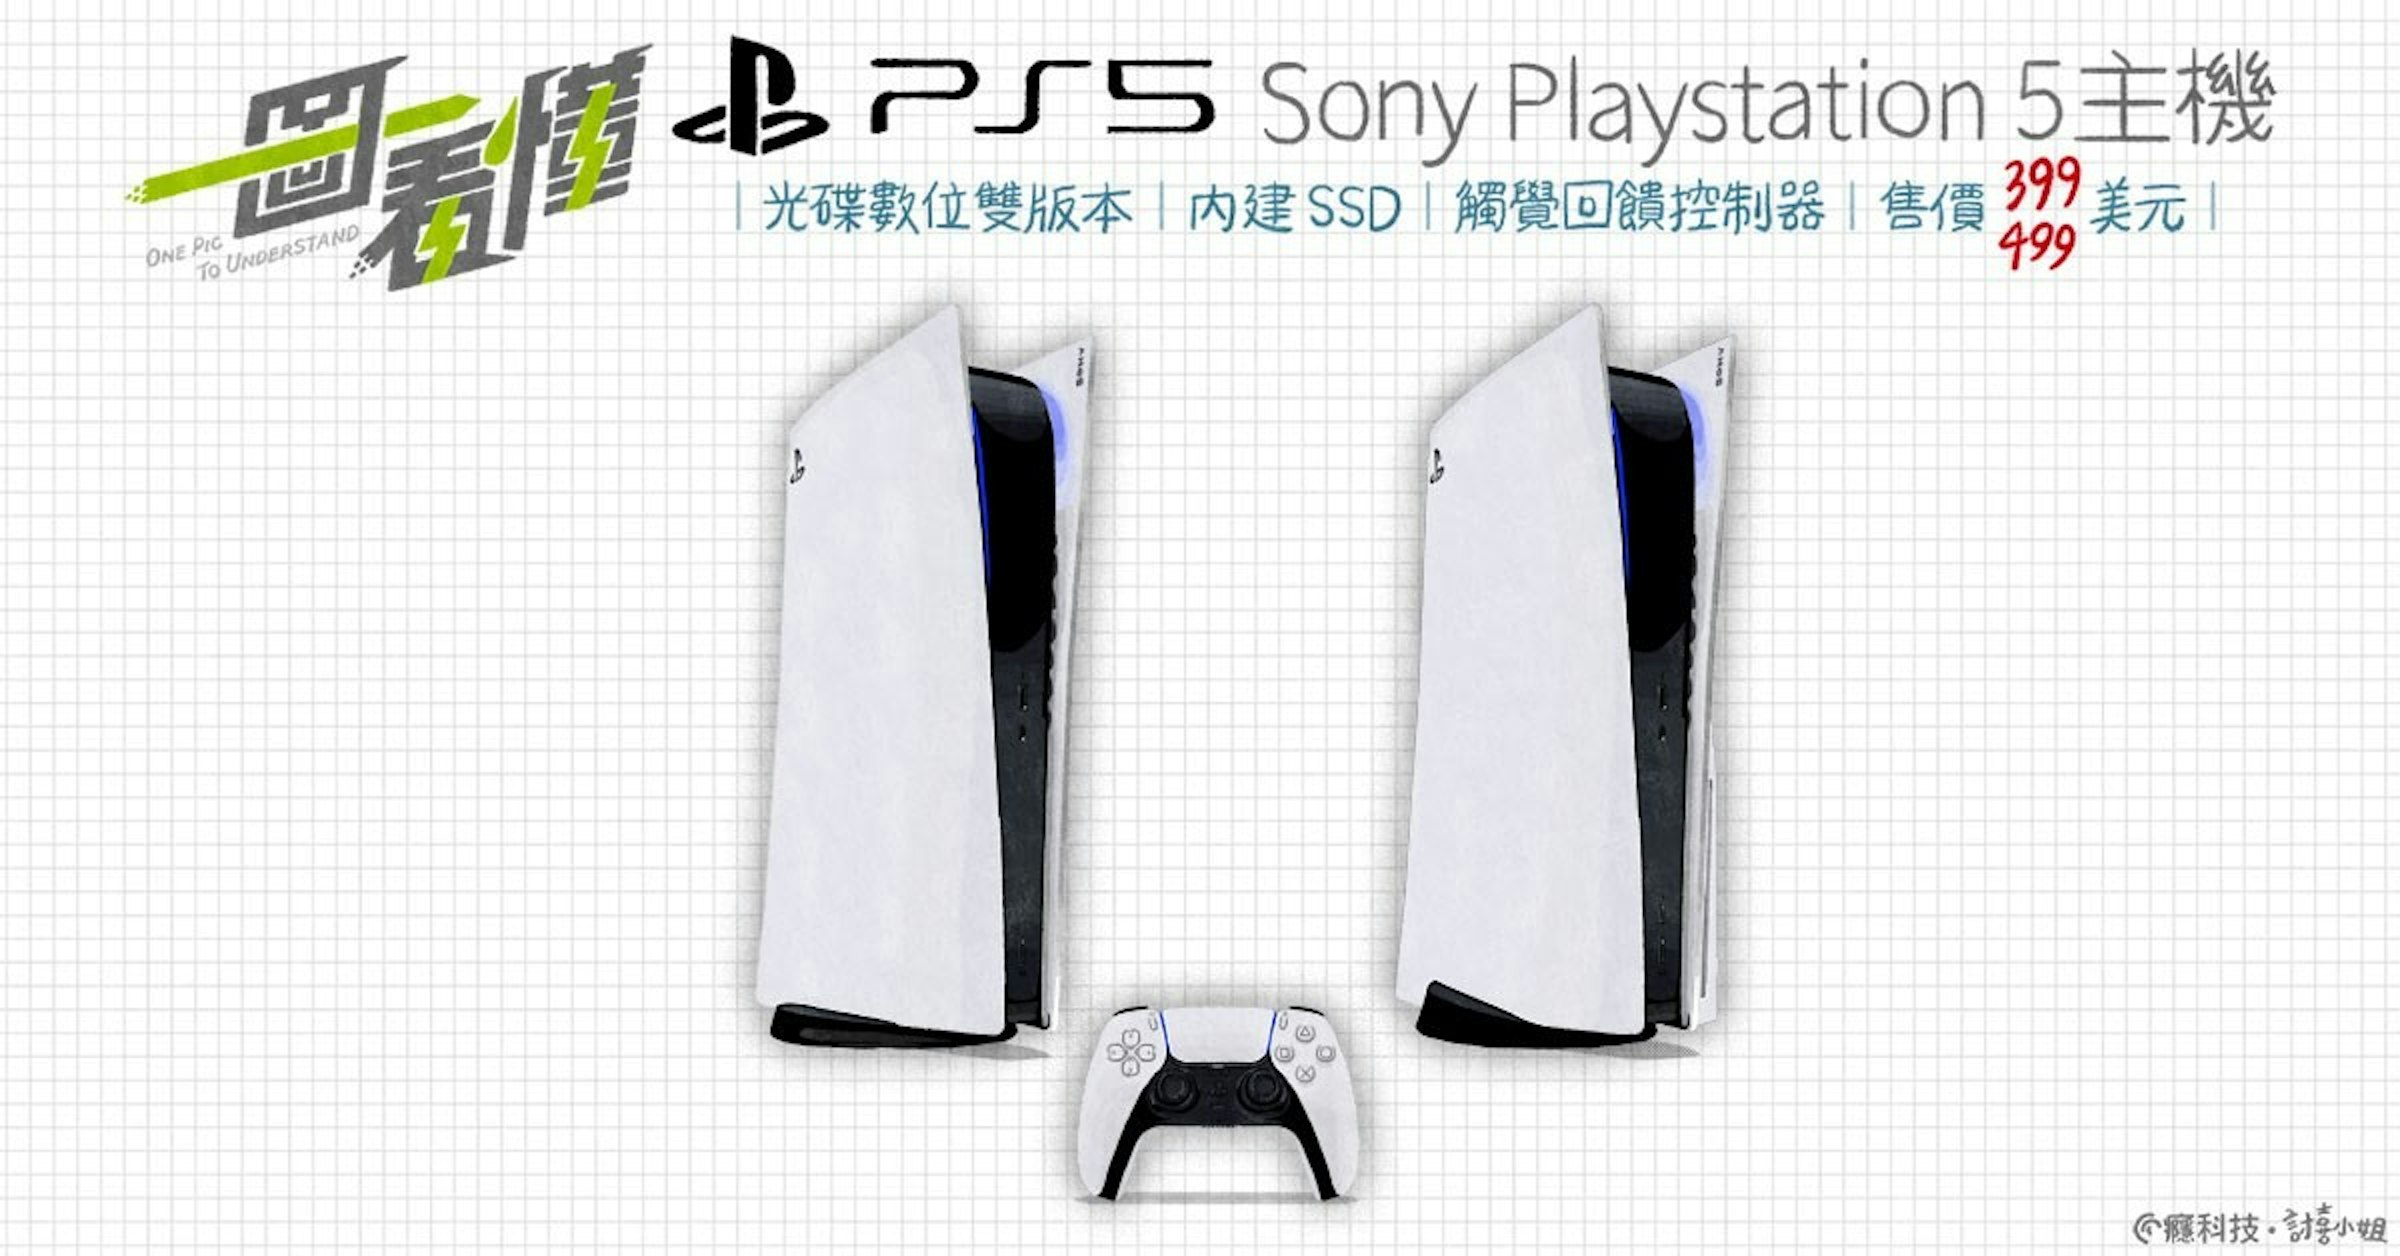 照片中提到了BPS5 Sony Playstation 5、ONE PIC、To UNDERSTAND，跟的PlayStation有關，包含了的PlayStation 4、衣架、牌、產品設計、產品